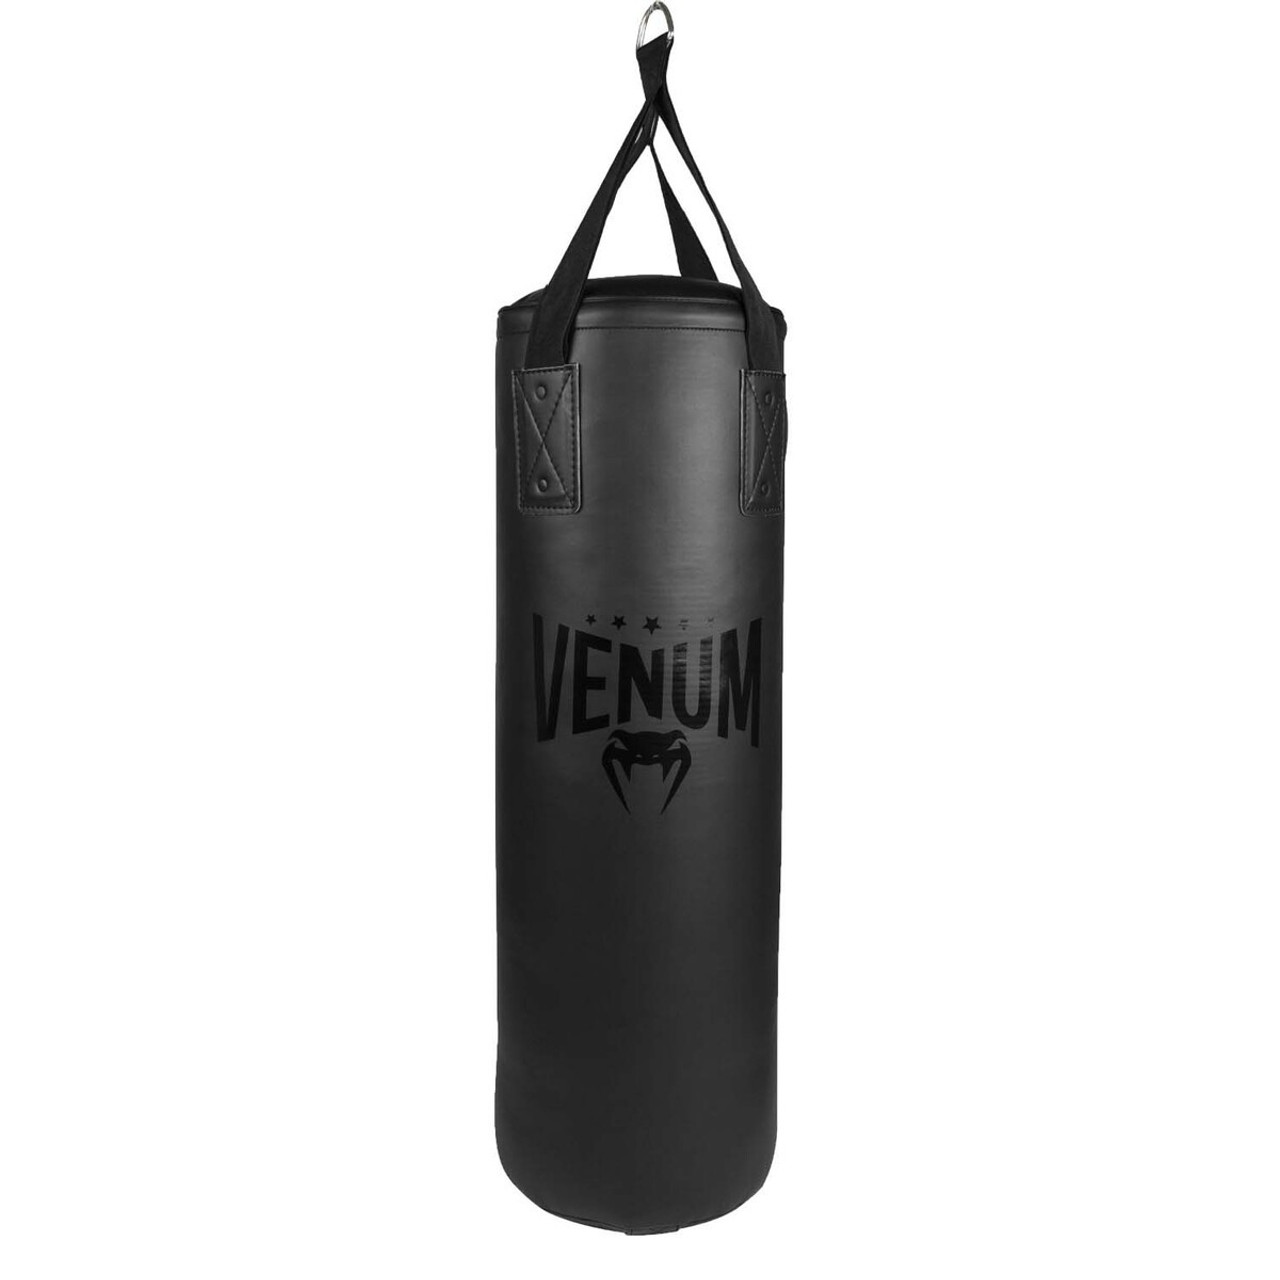 Venum Origins Heavy Boxing Bag Kit, 70 lbs